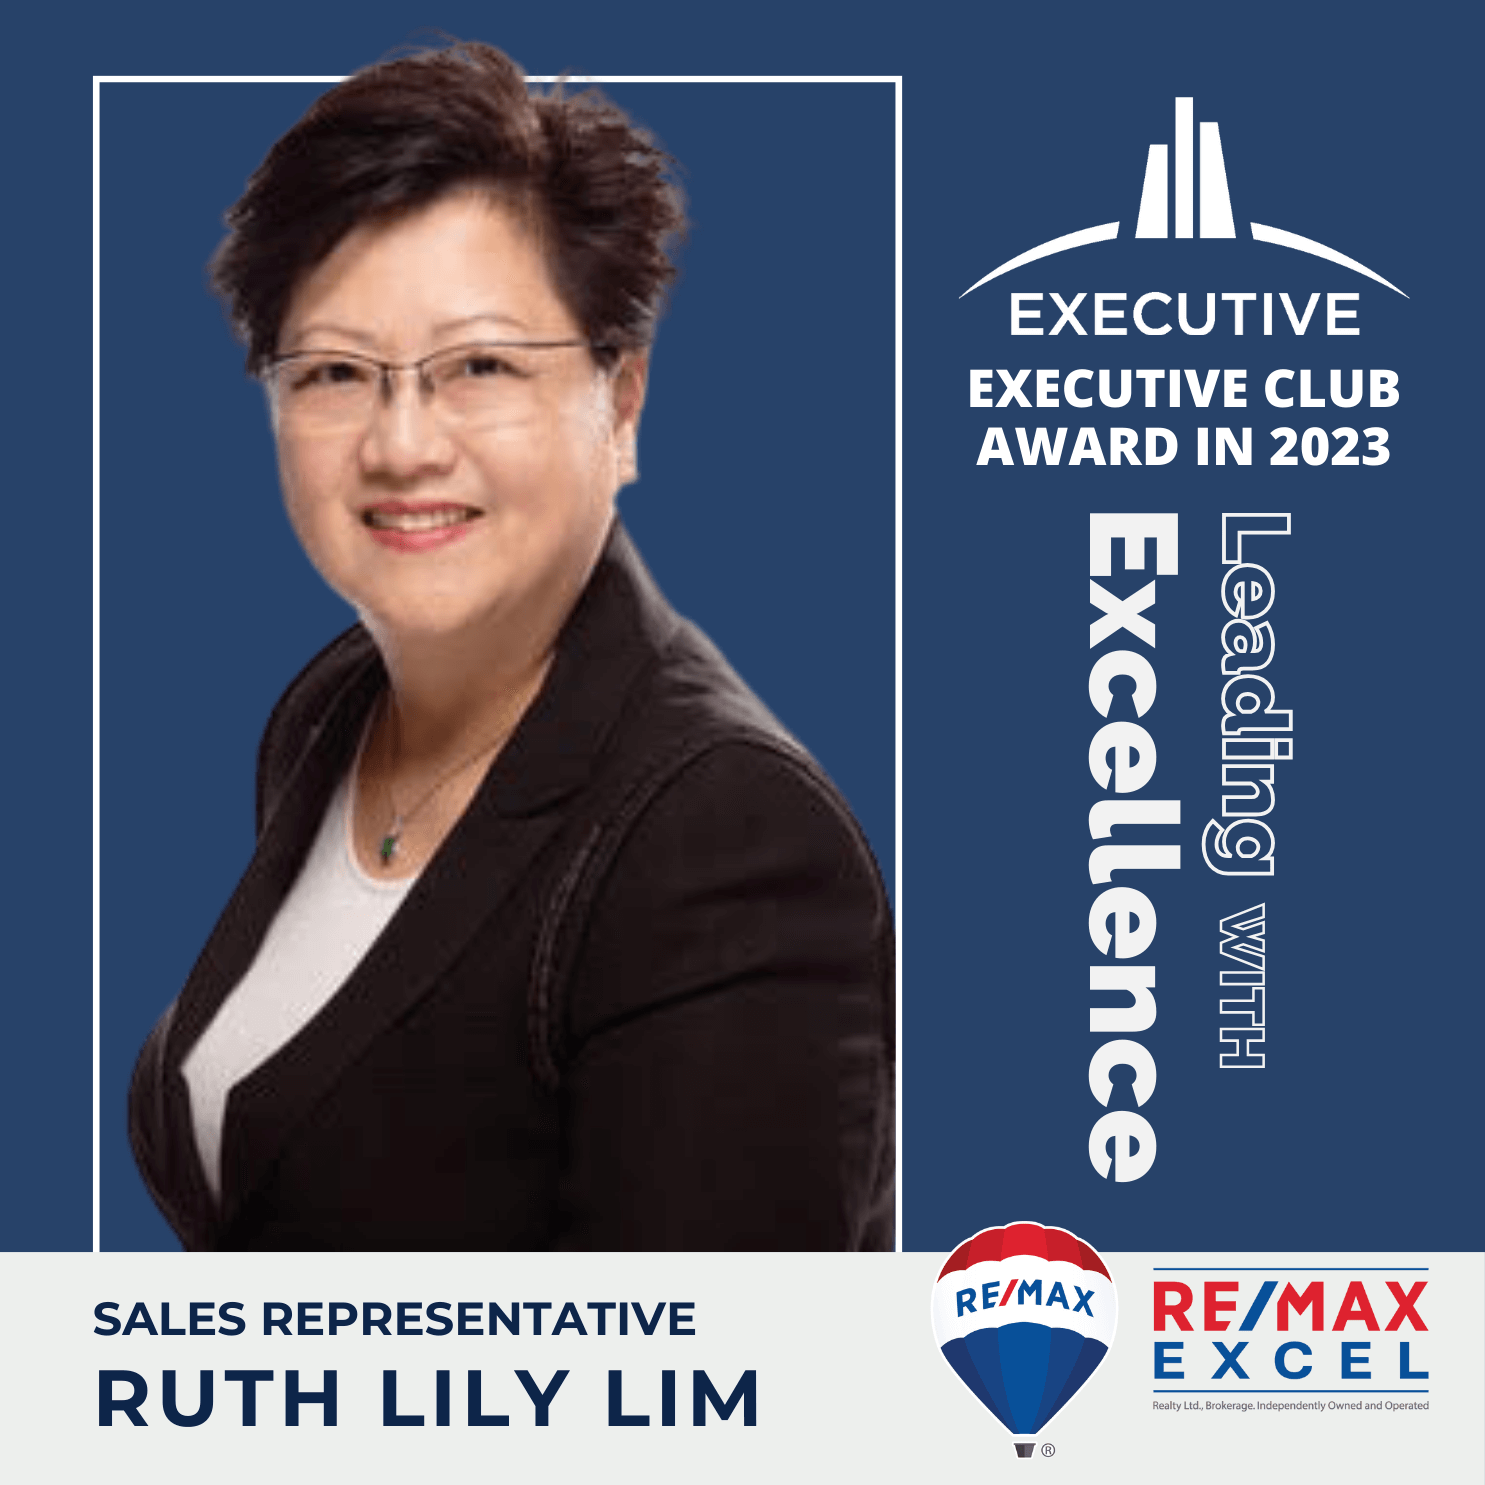 Ruth Lily Lim